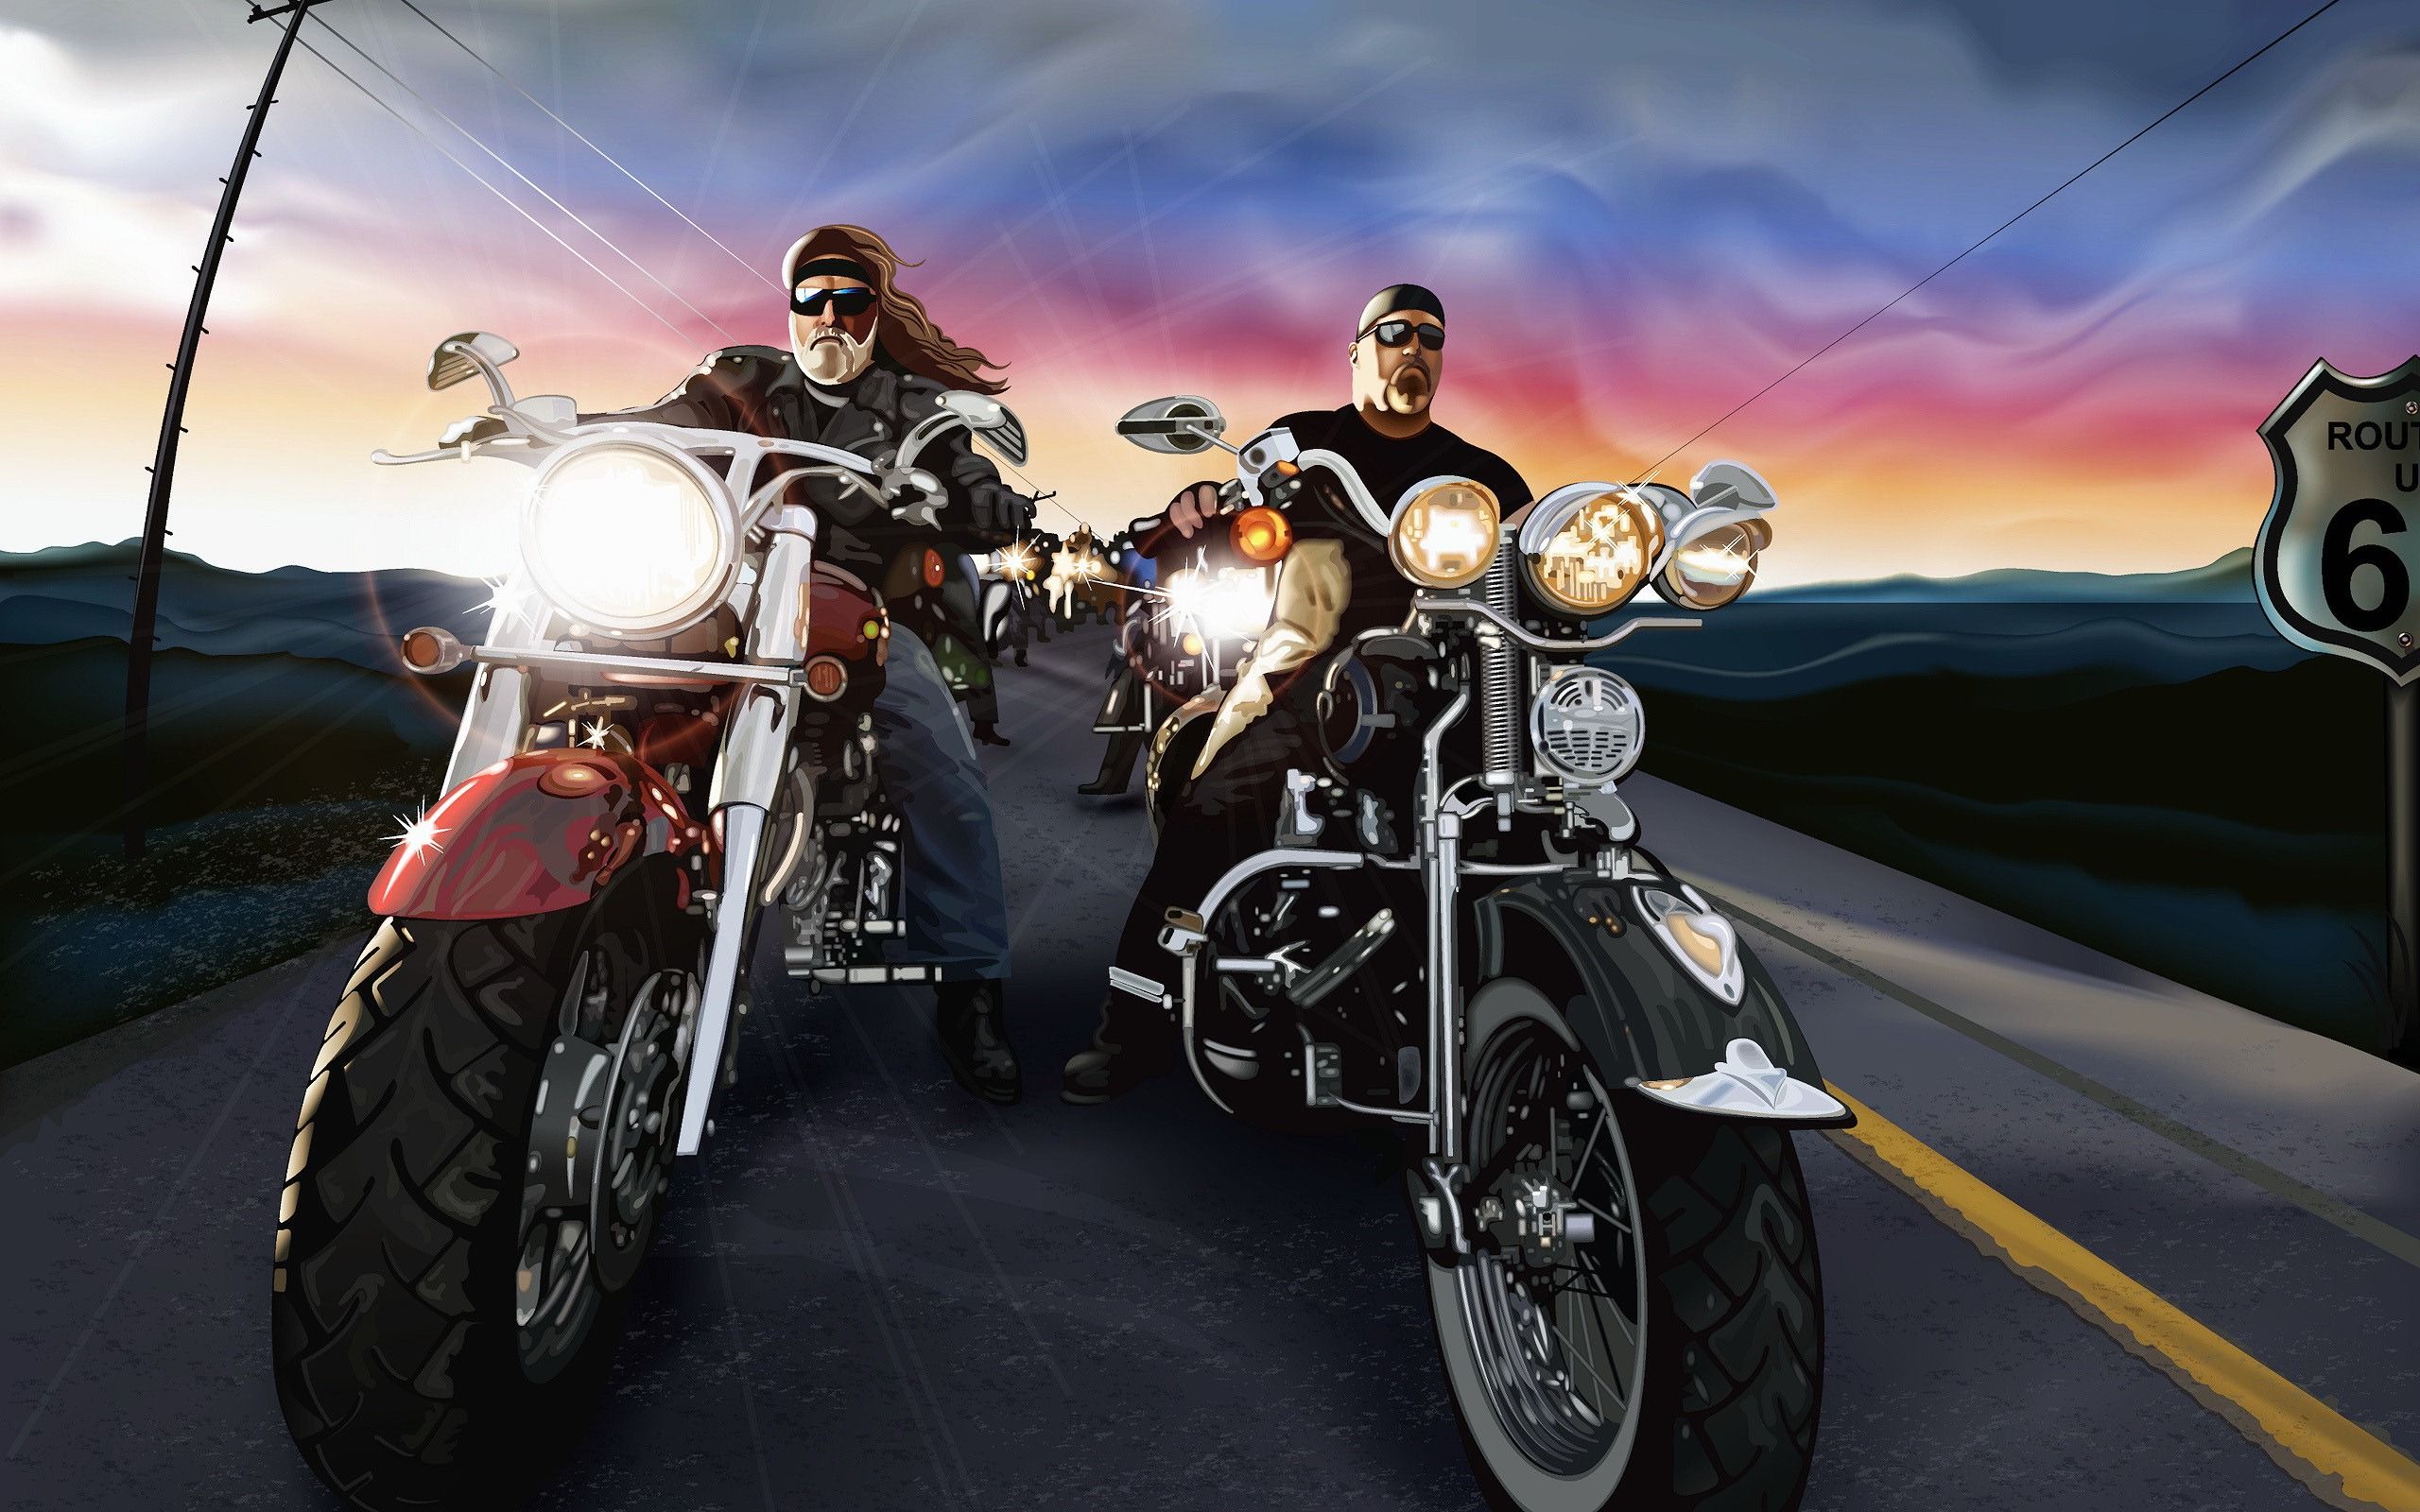 Fonds d'écran Harley Davidson : tous les wallpapers Harley Davidson